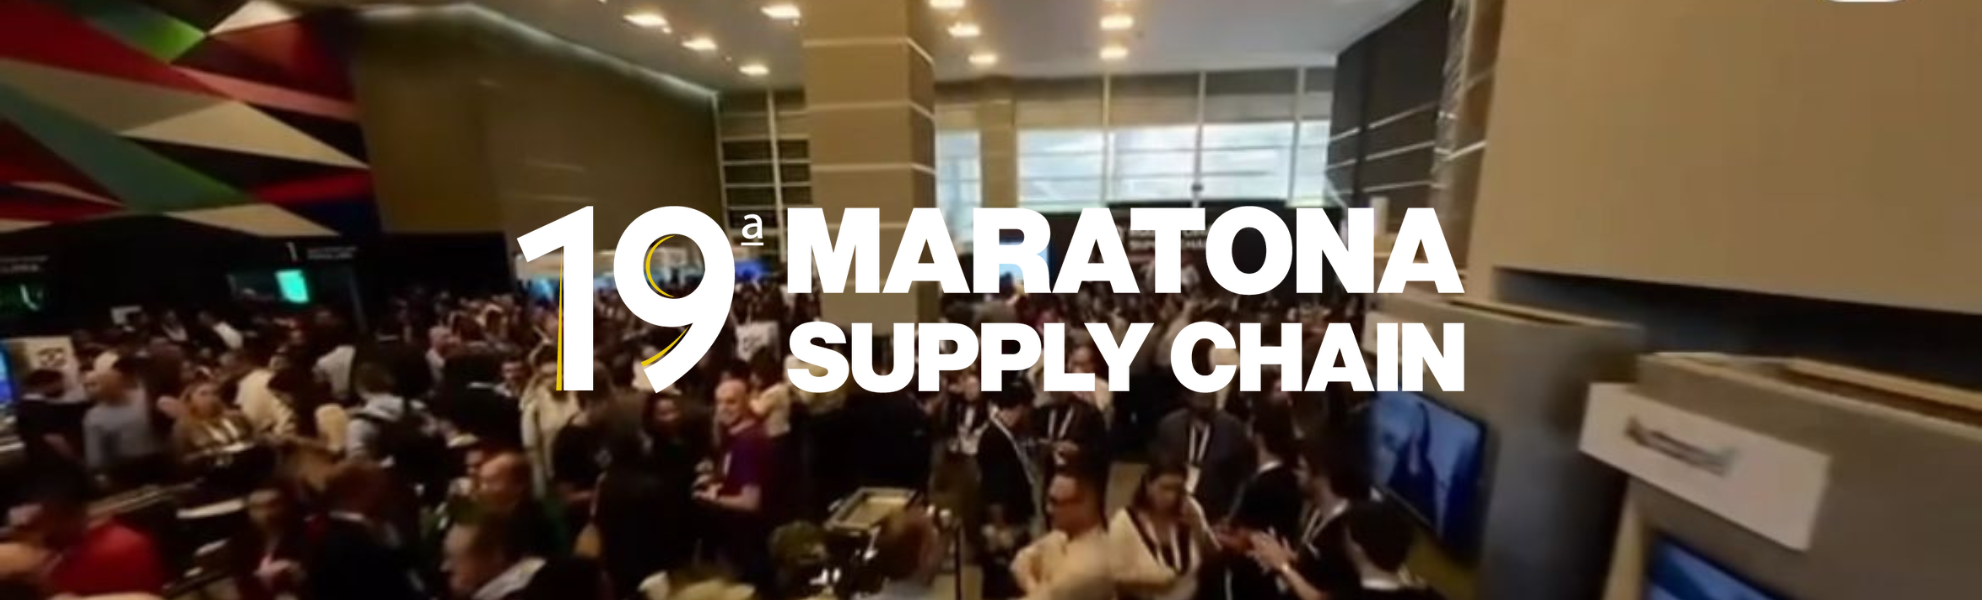 Autopel marca presença na 19ª Maratona Supply Chain